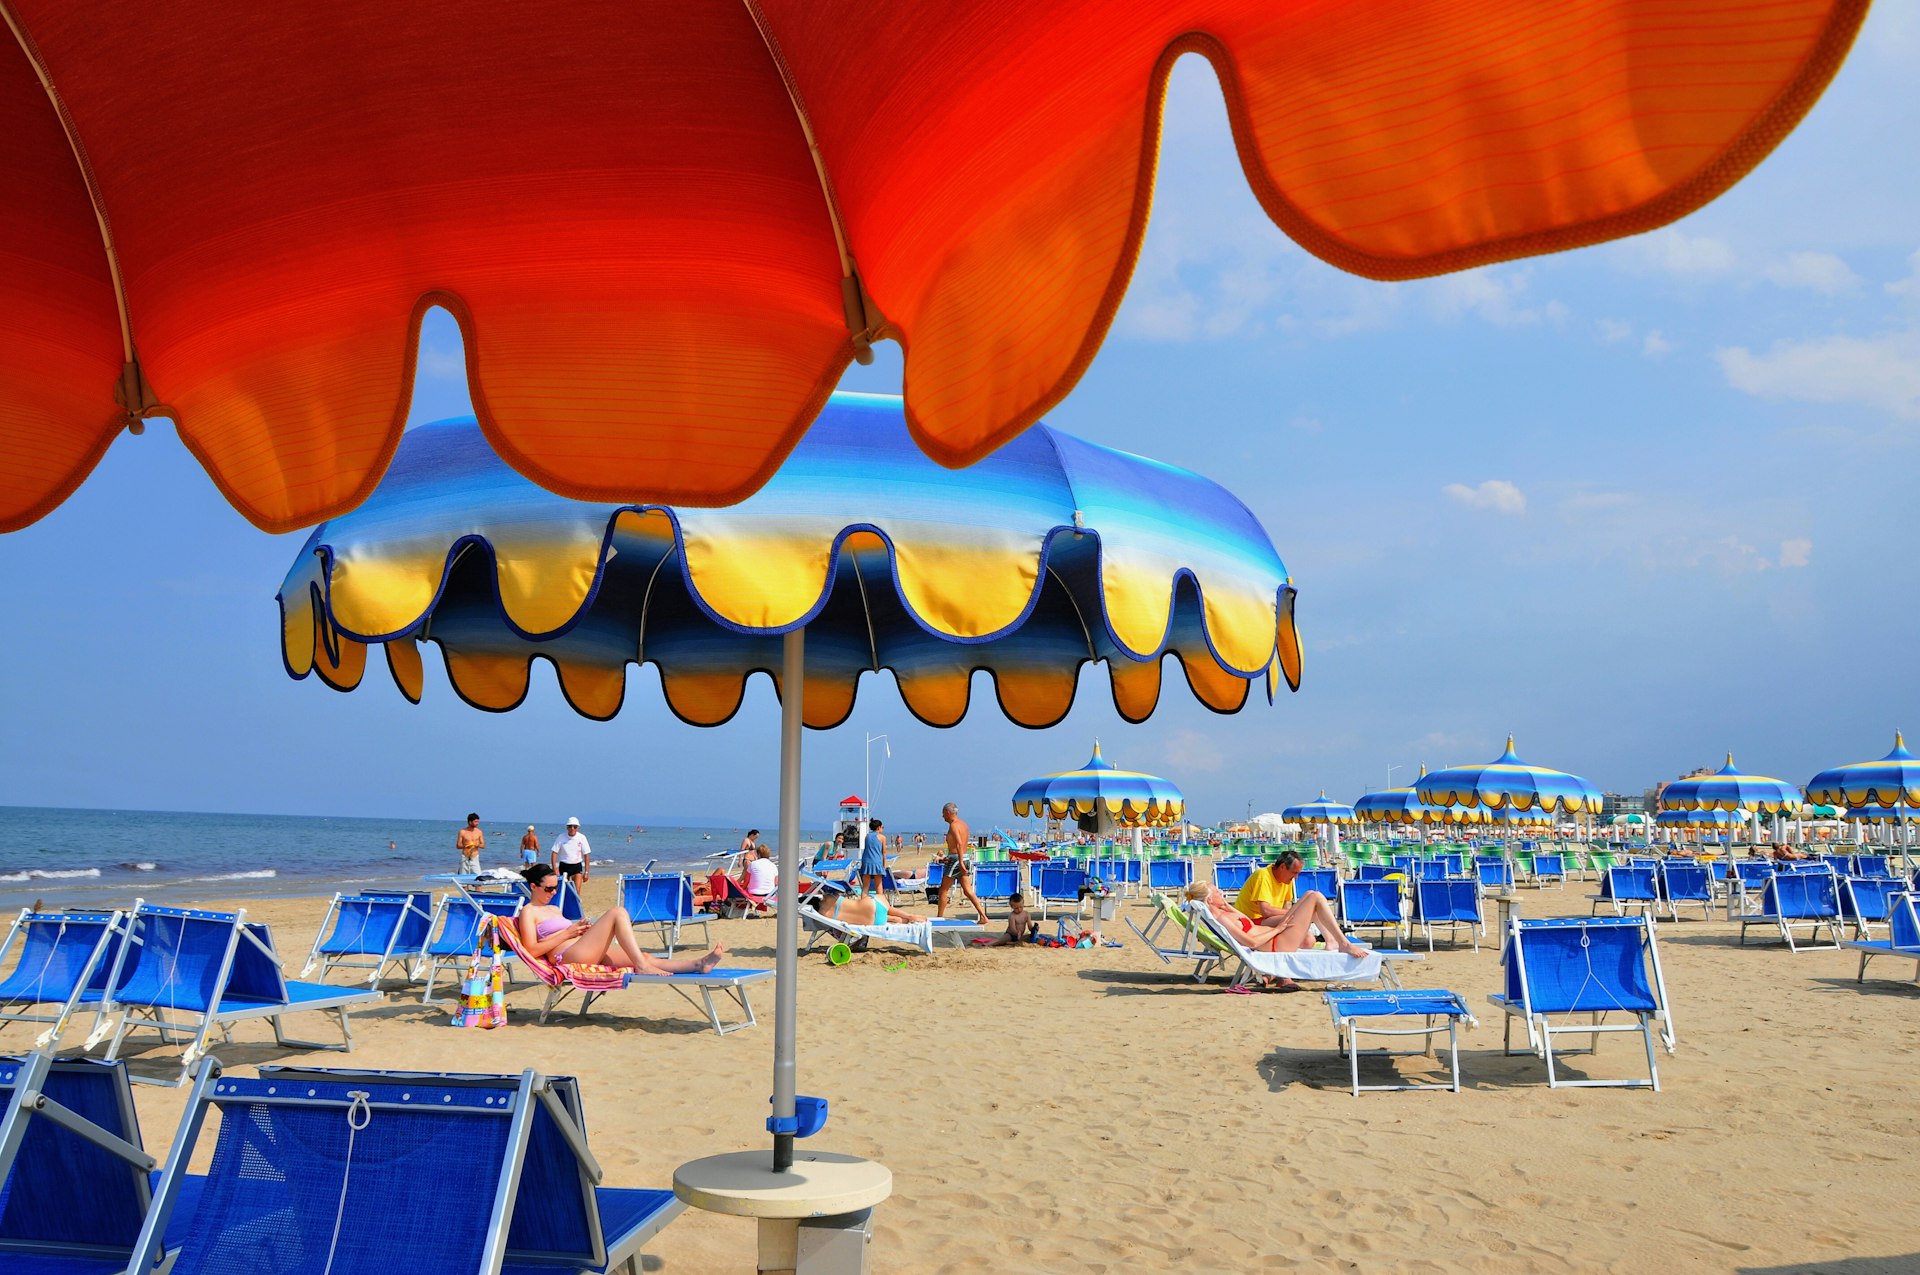 Beach umbrellas on the sand at Rimini